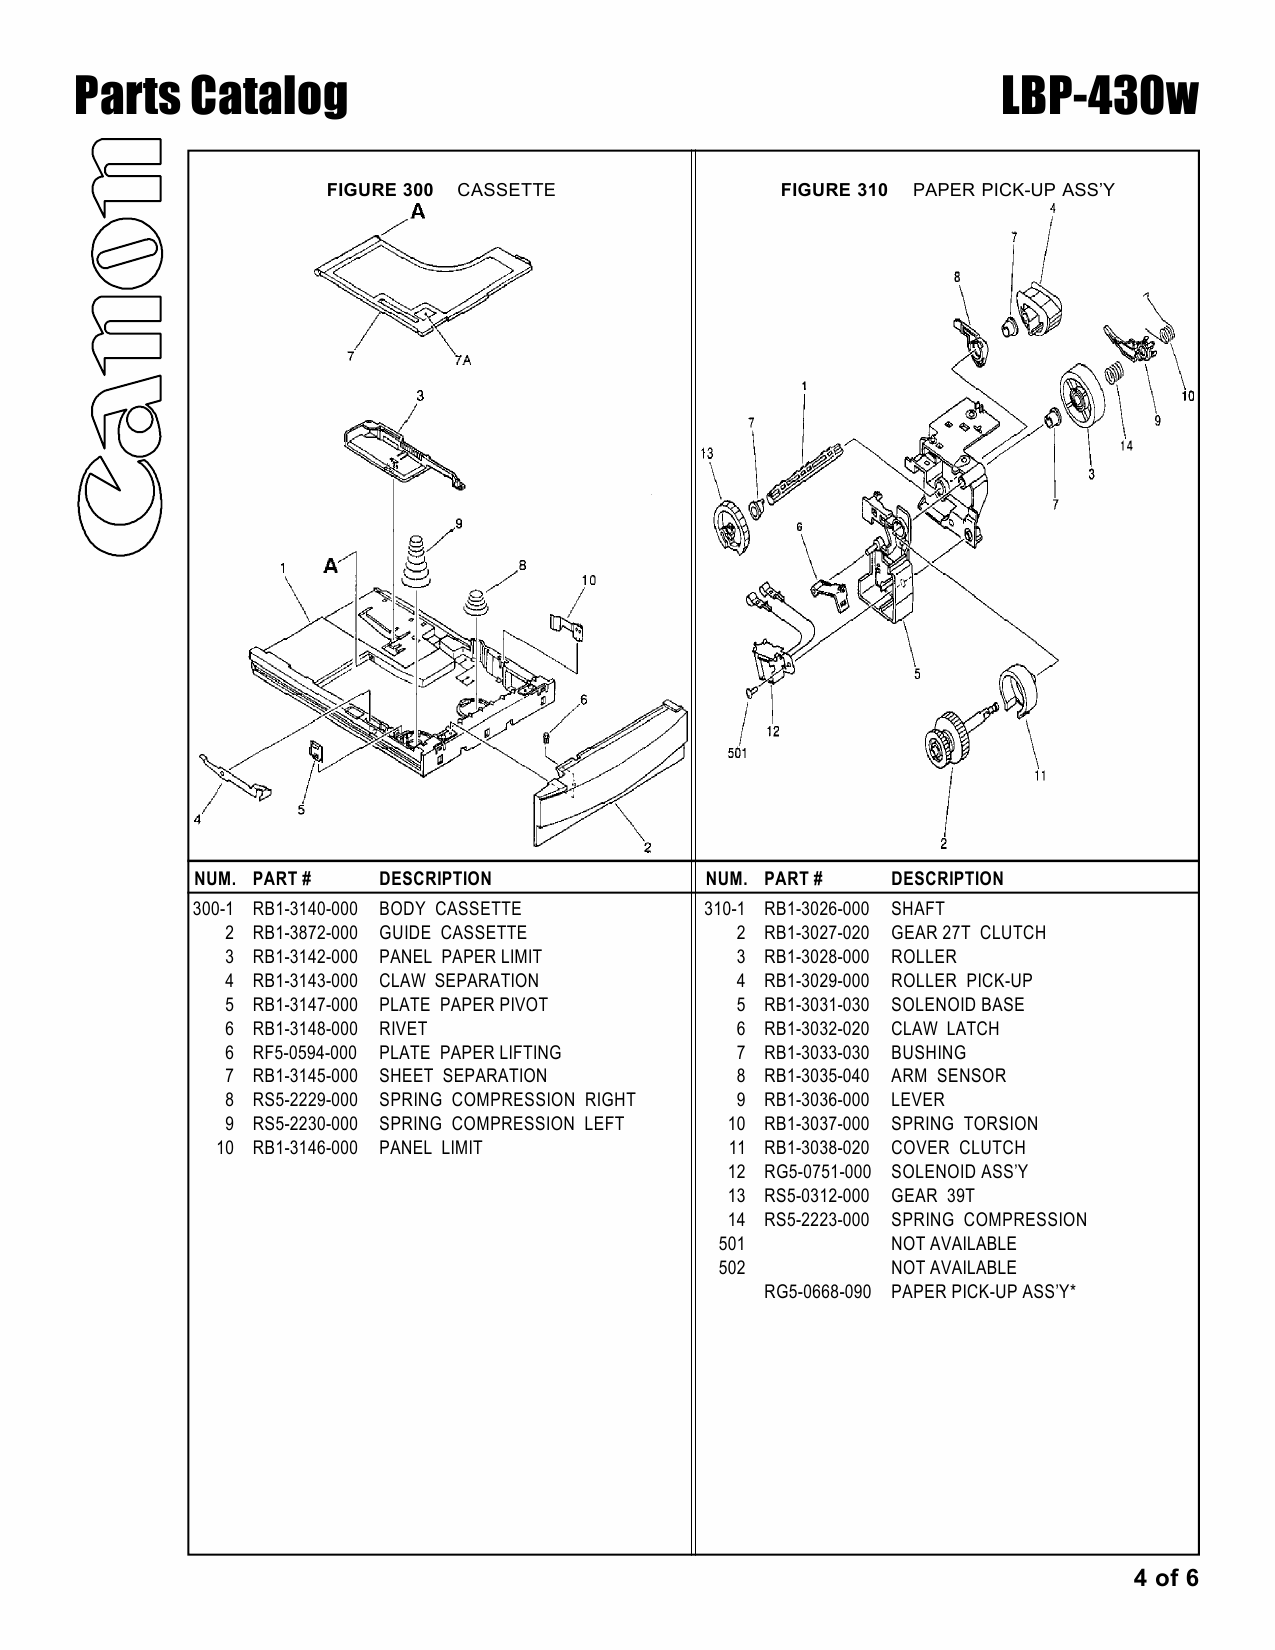 Canon imageCLASS LBP-430w Parts Catalog Manual-4